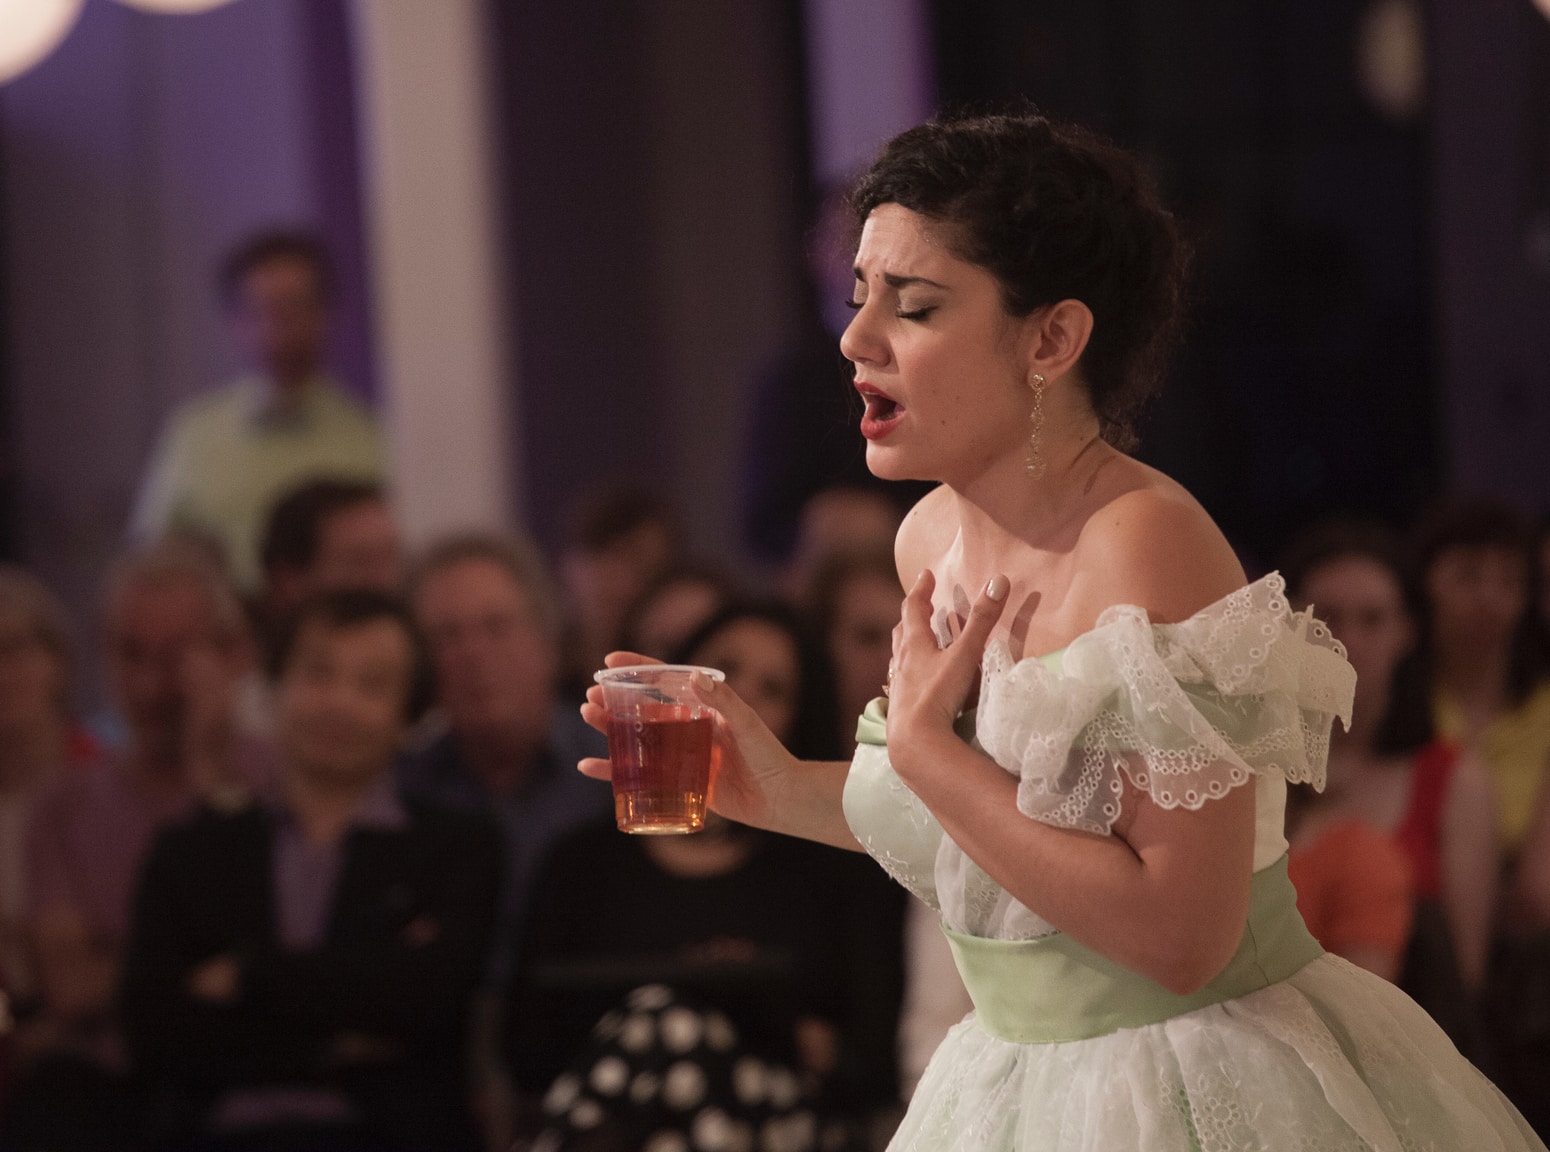 Against the Grain Theatre brings back award-winning Mozart classic Figaro’s Wedding